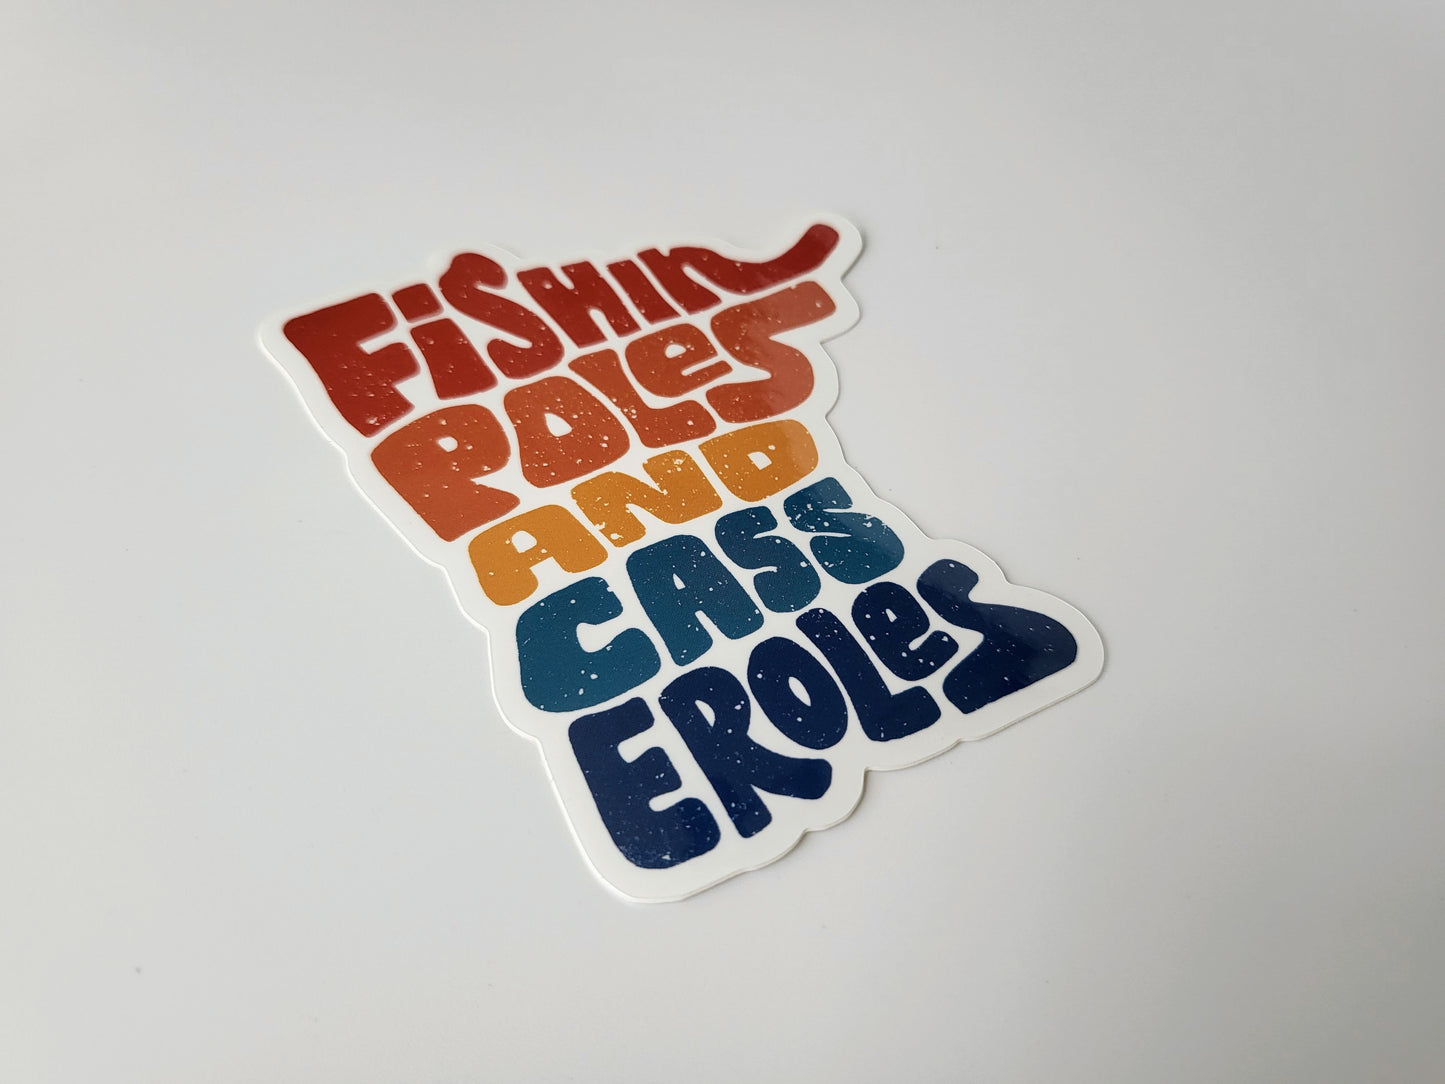 Fishin Poles and Casseroles - Funny Minnesota Sticker